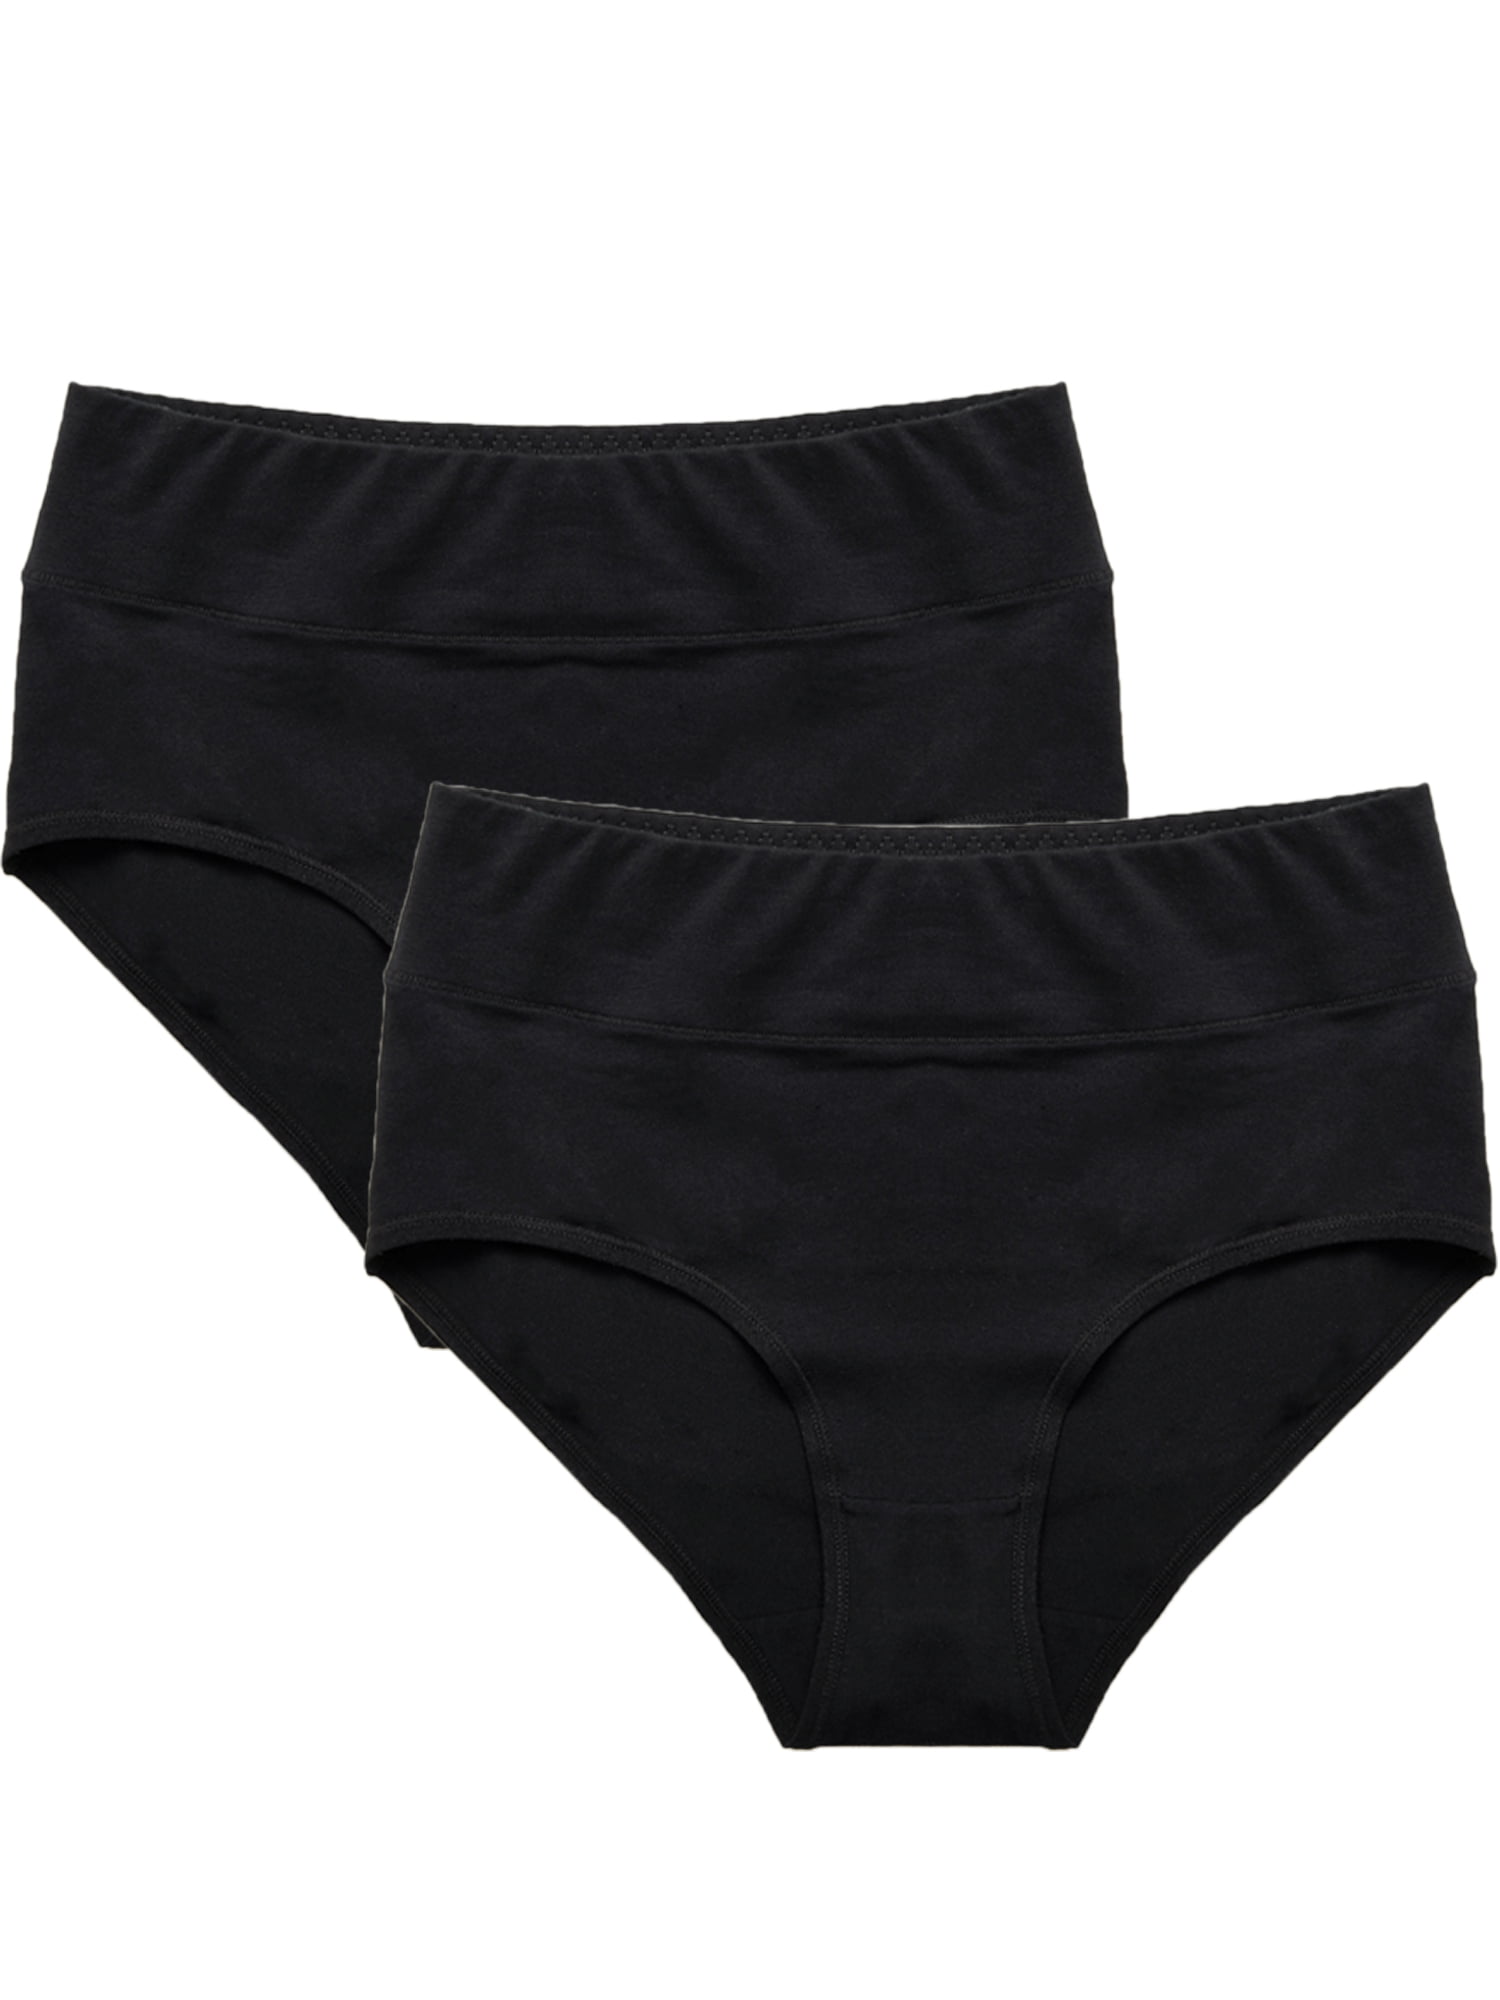 LELINTA Women's Cotton Underwear High Waist Full Coverage Brief Panty ...